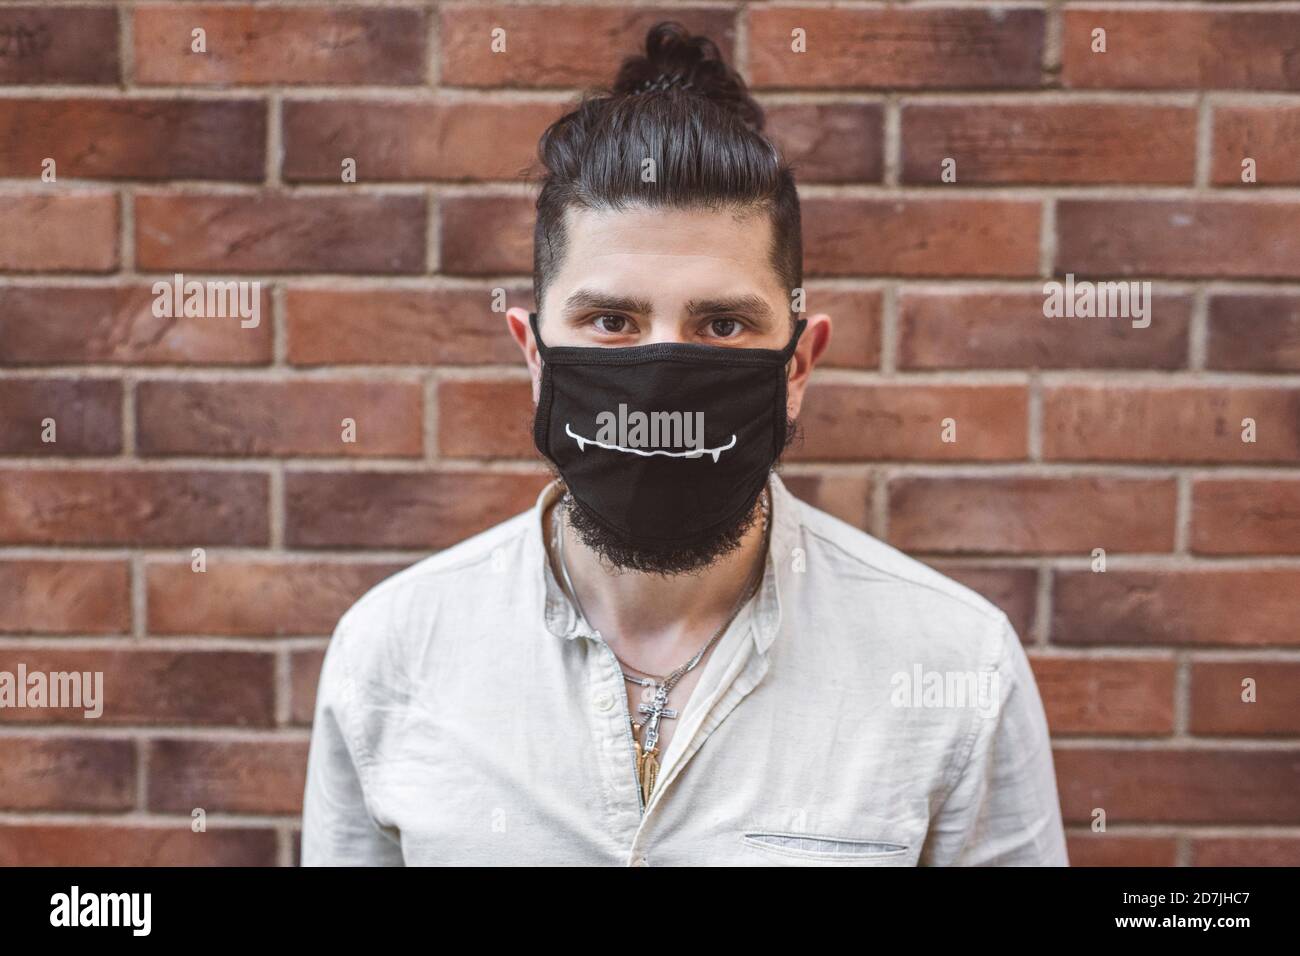 Man wearing face mask against brick wall during coronavirus crisis Stock Photo